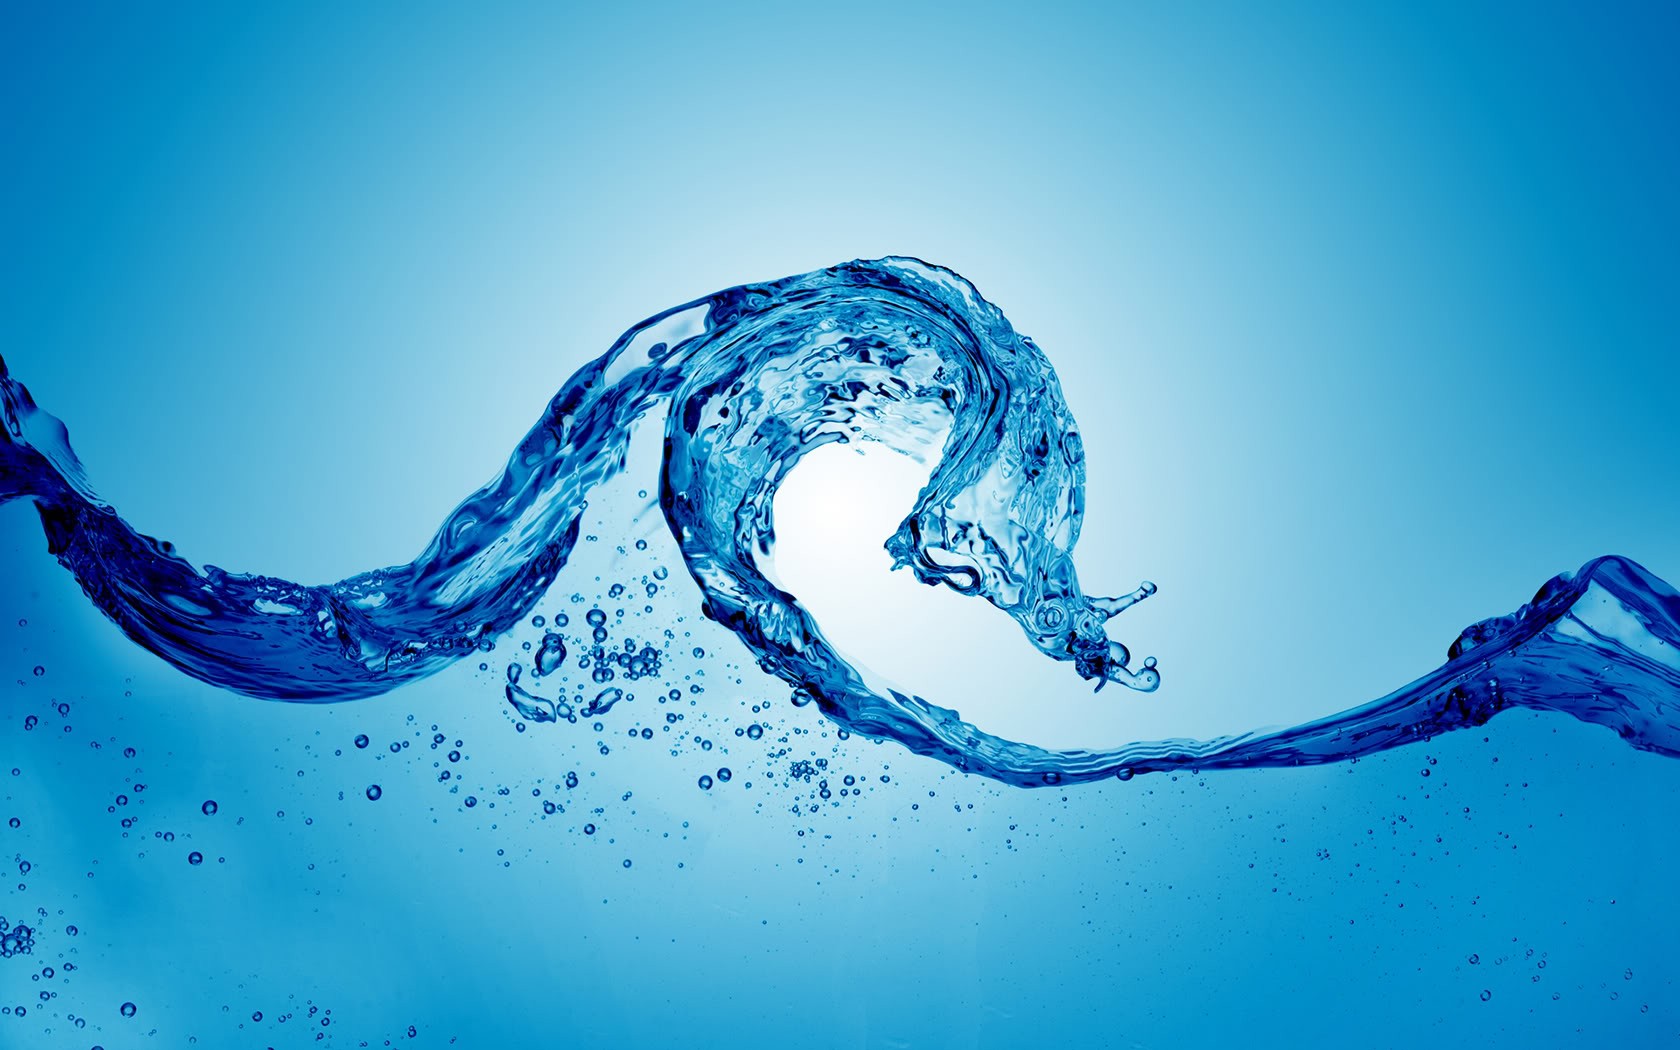 General 1680x1050 water simple background waves cyan blue gradient liquid blue background